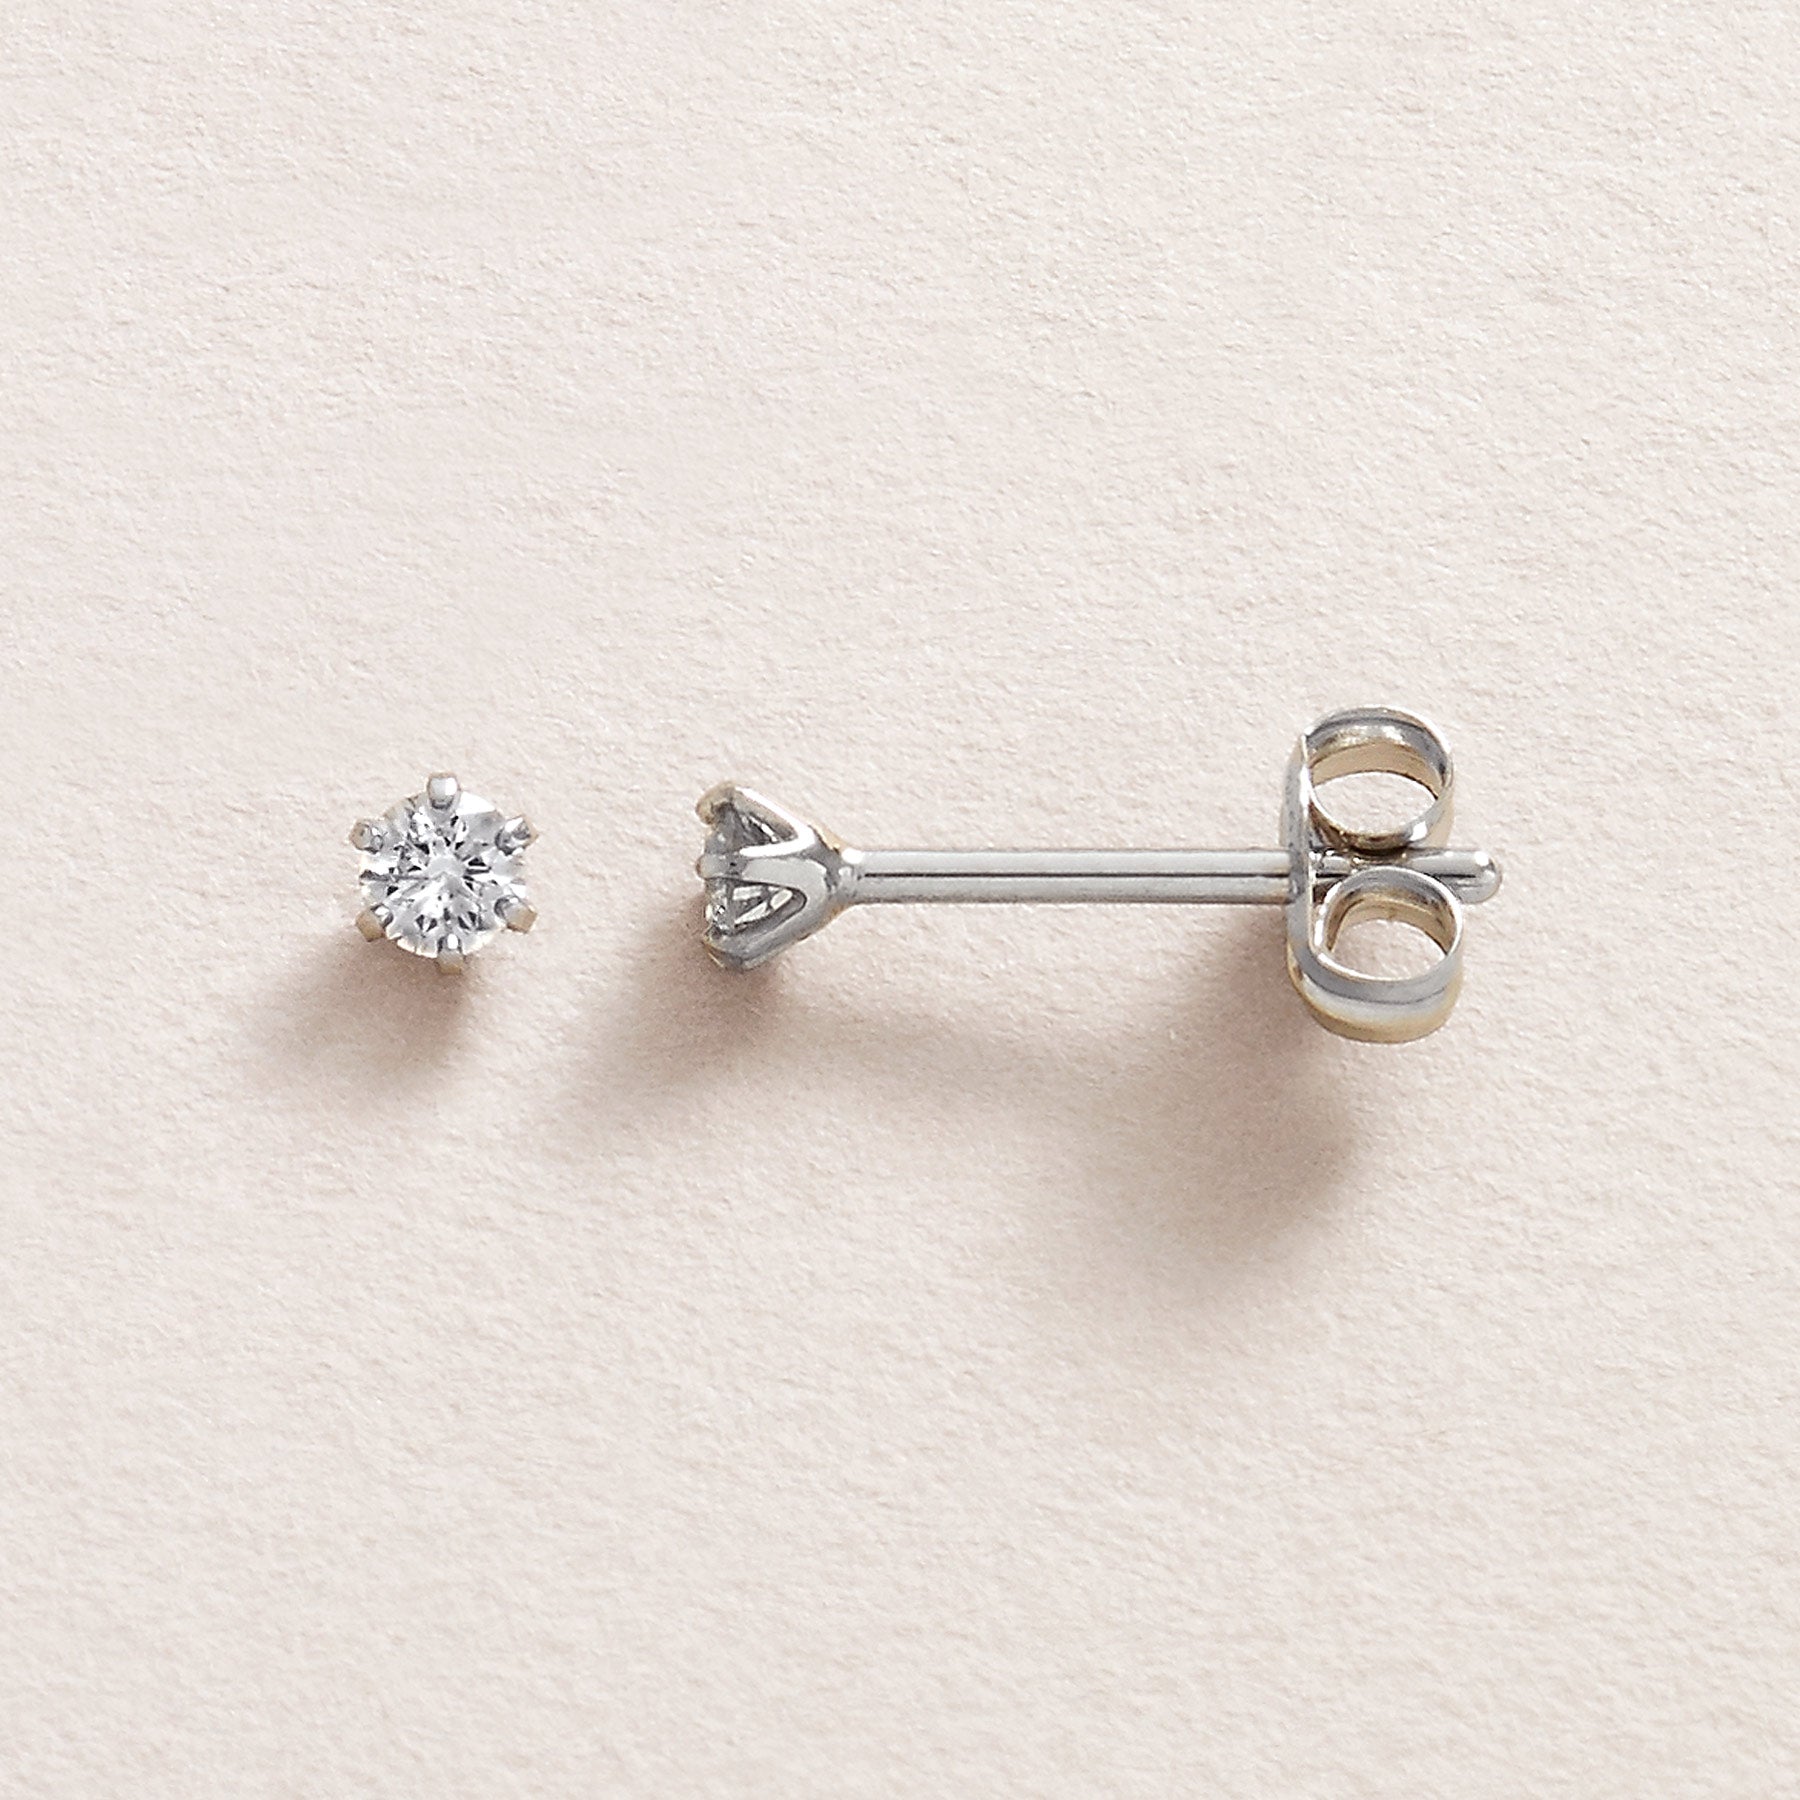 [Second Earrings] Platinum Diamond Earrings 0. 14ct - Product Image